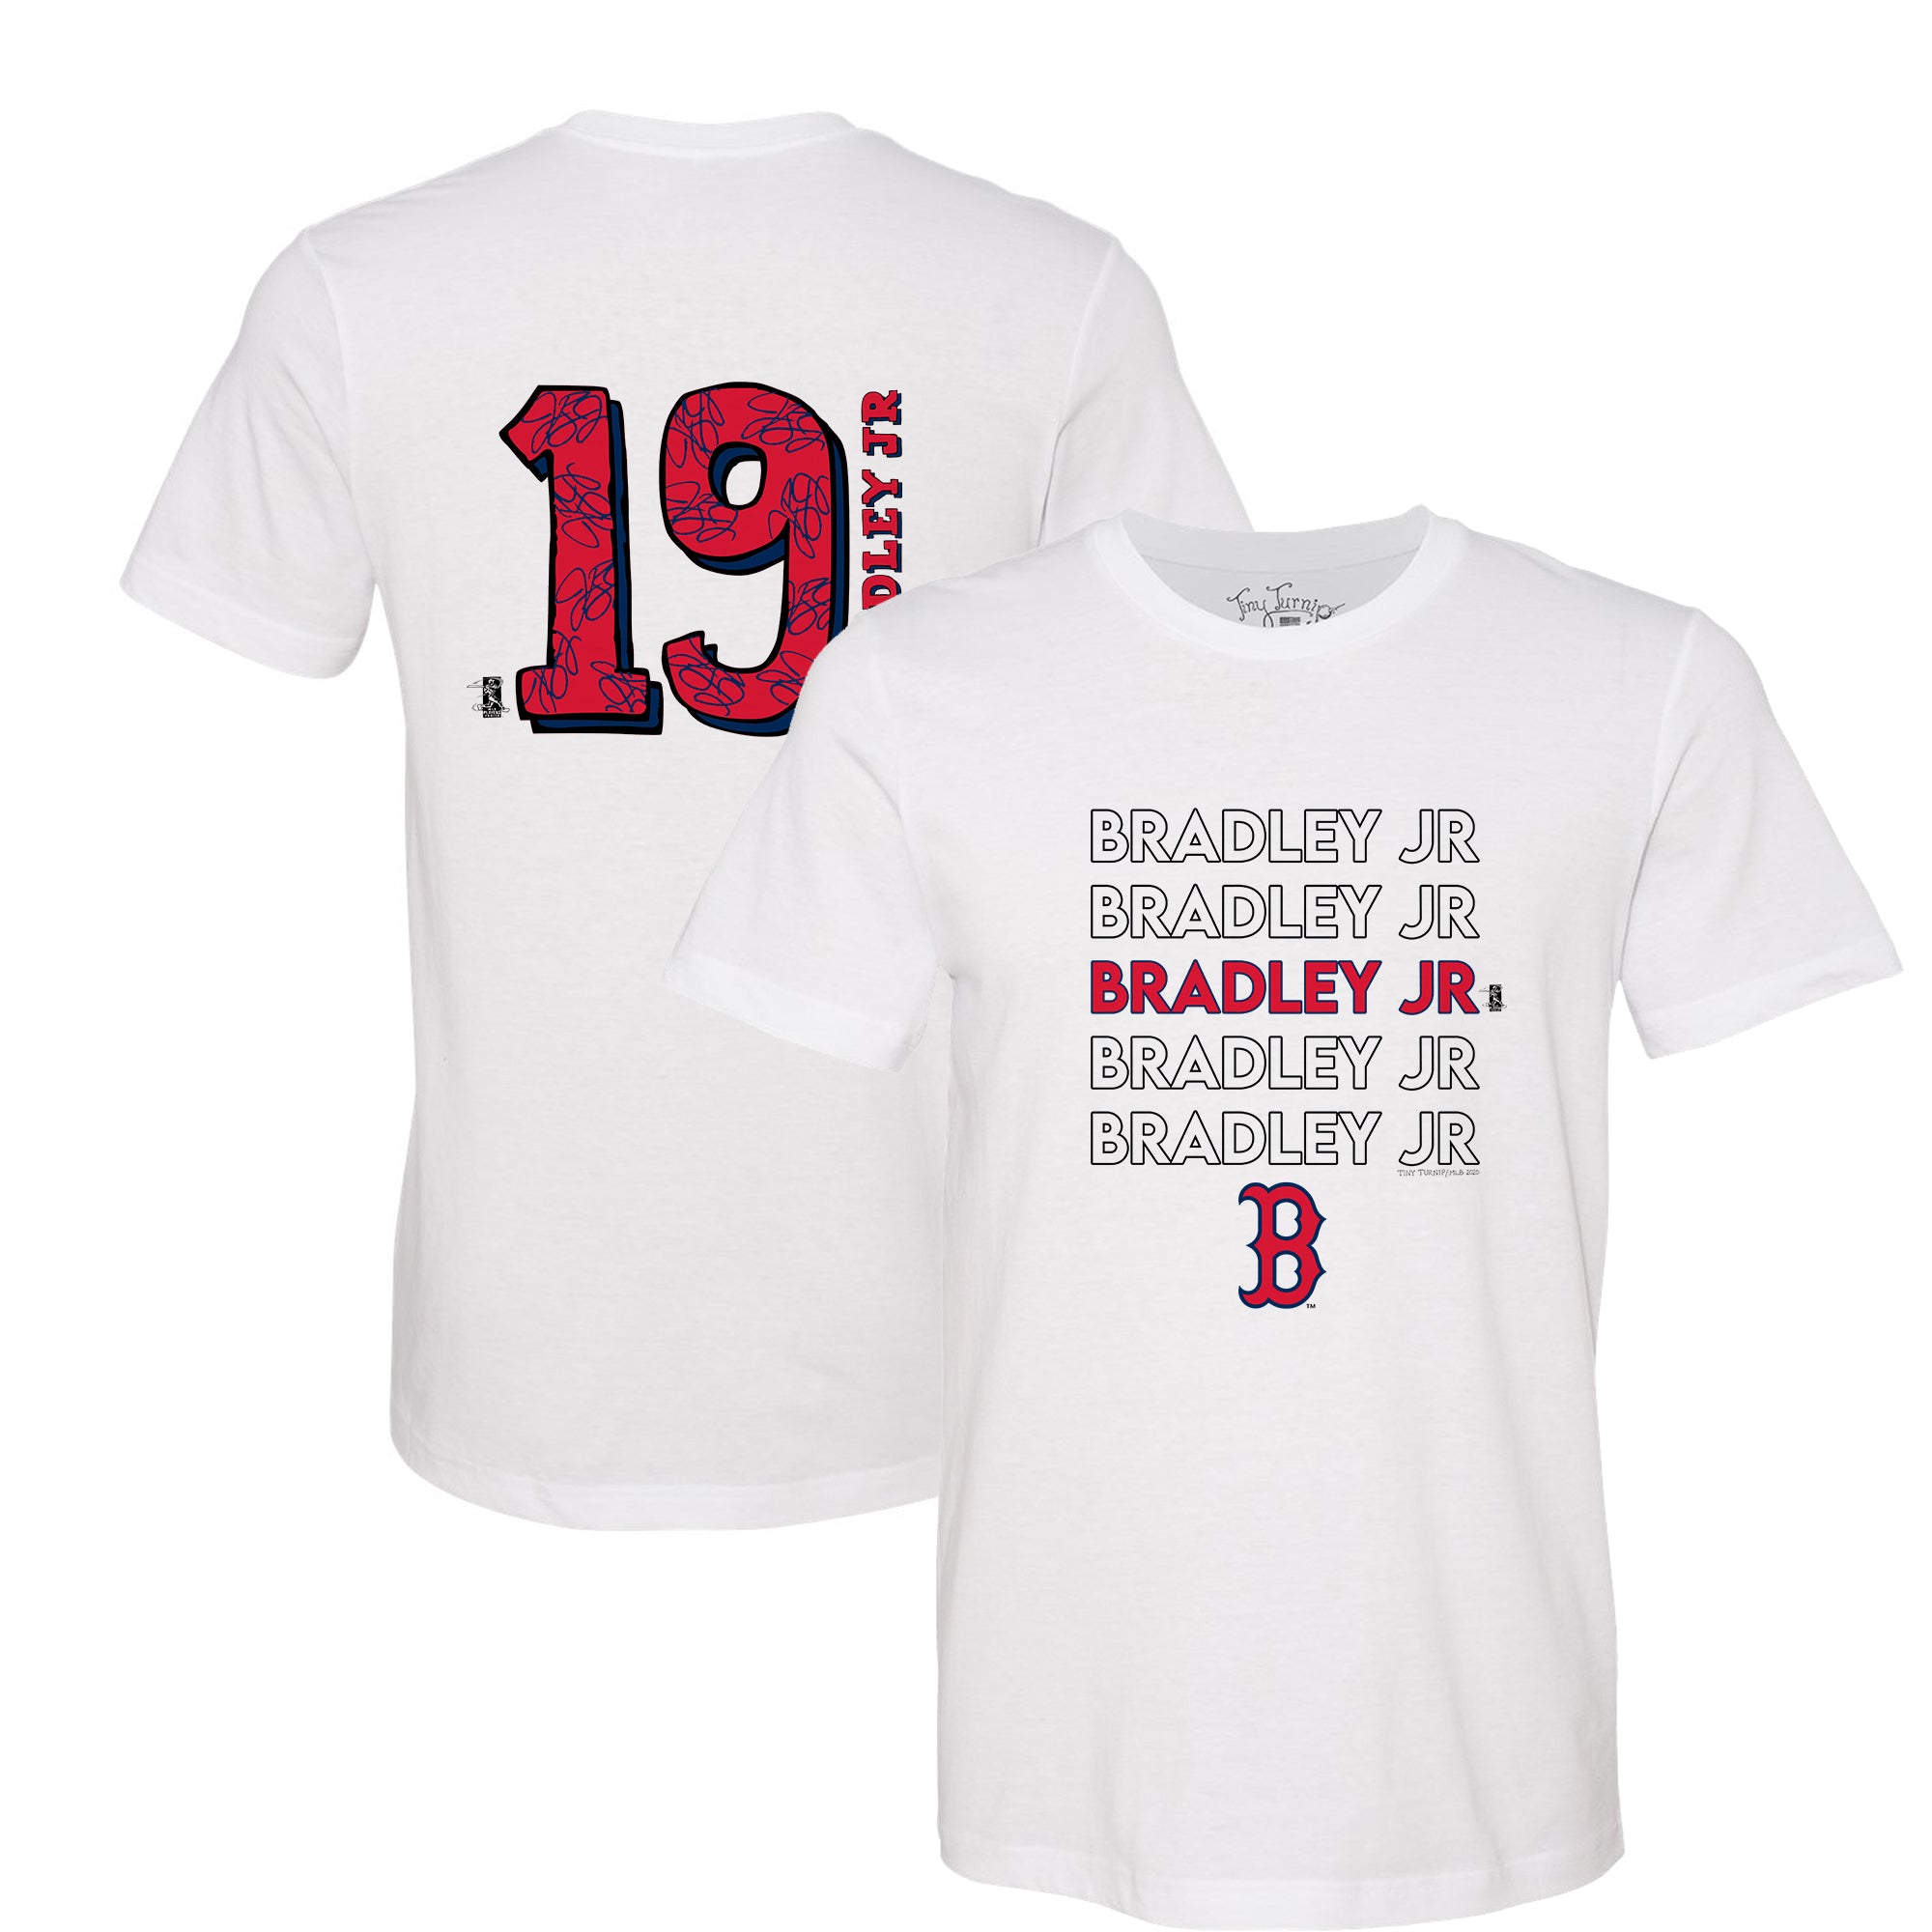 jackie bradley jr t shirt